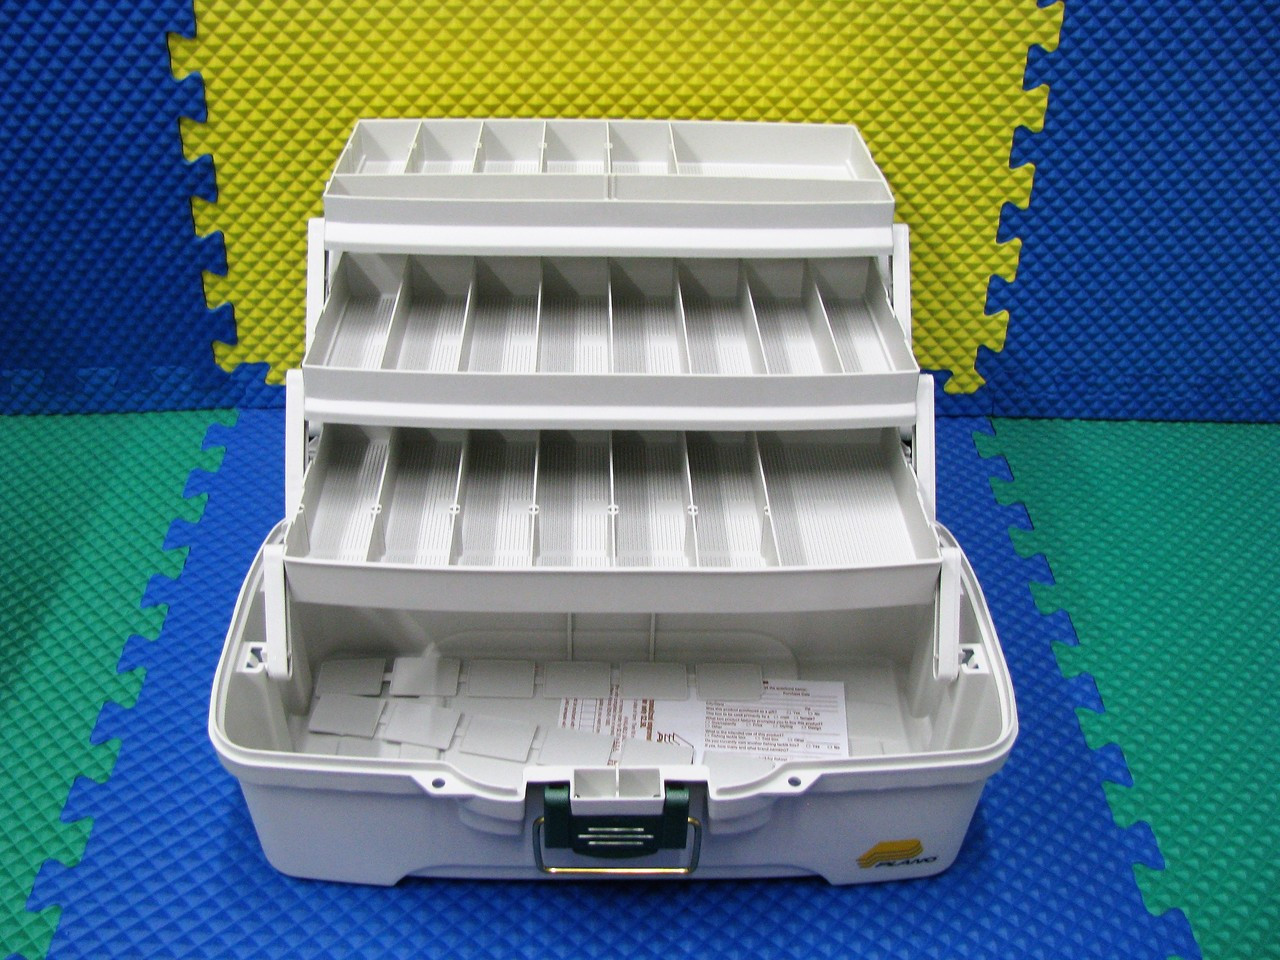 Plano One Tray Tackle Box